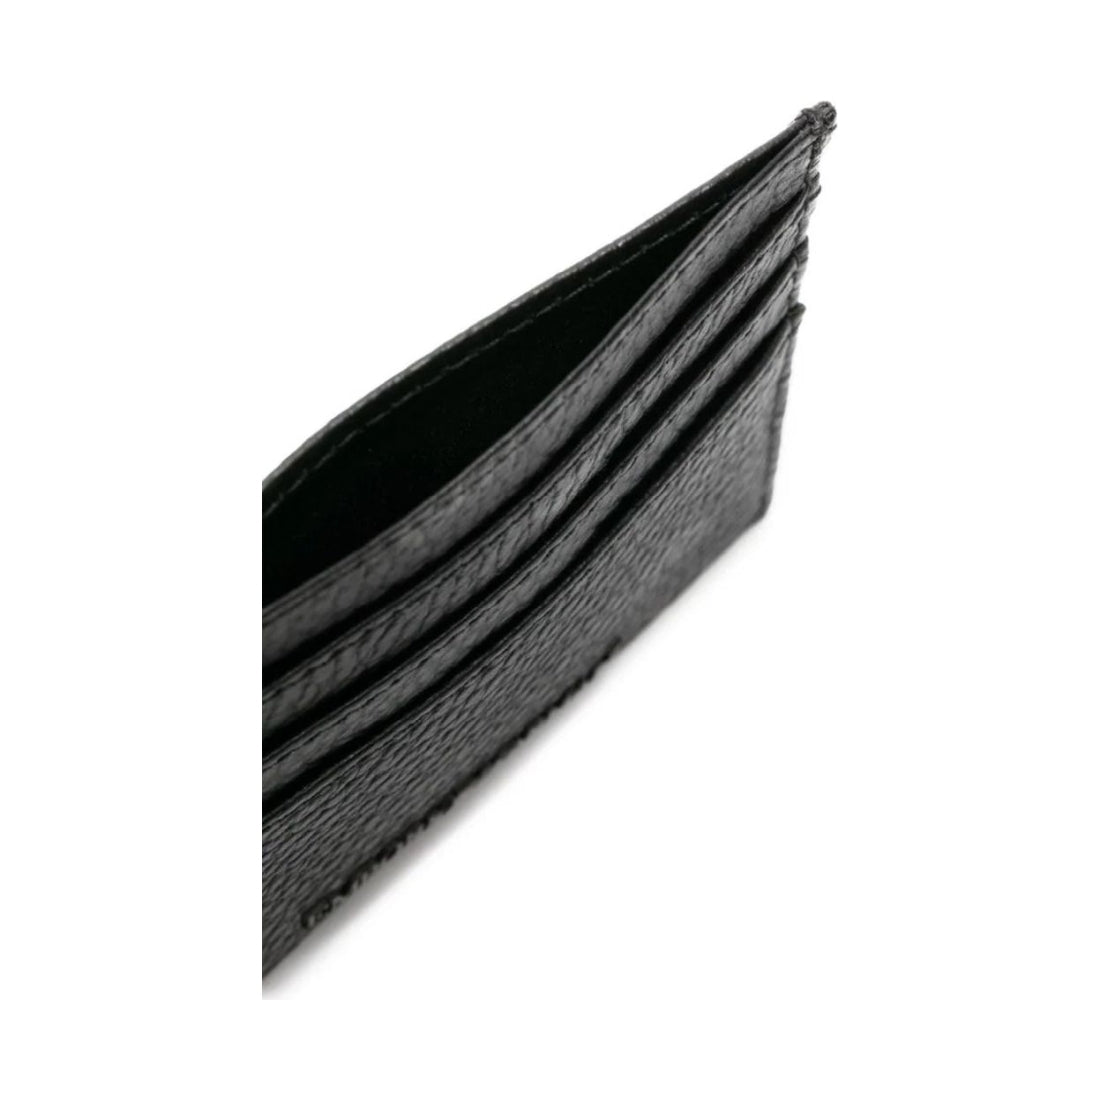 Emporio Armani mens nero casual card holder | Vilbury London